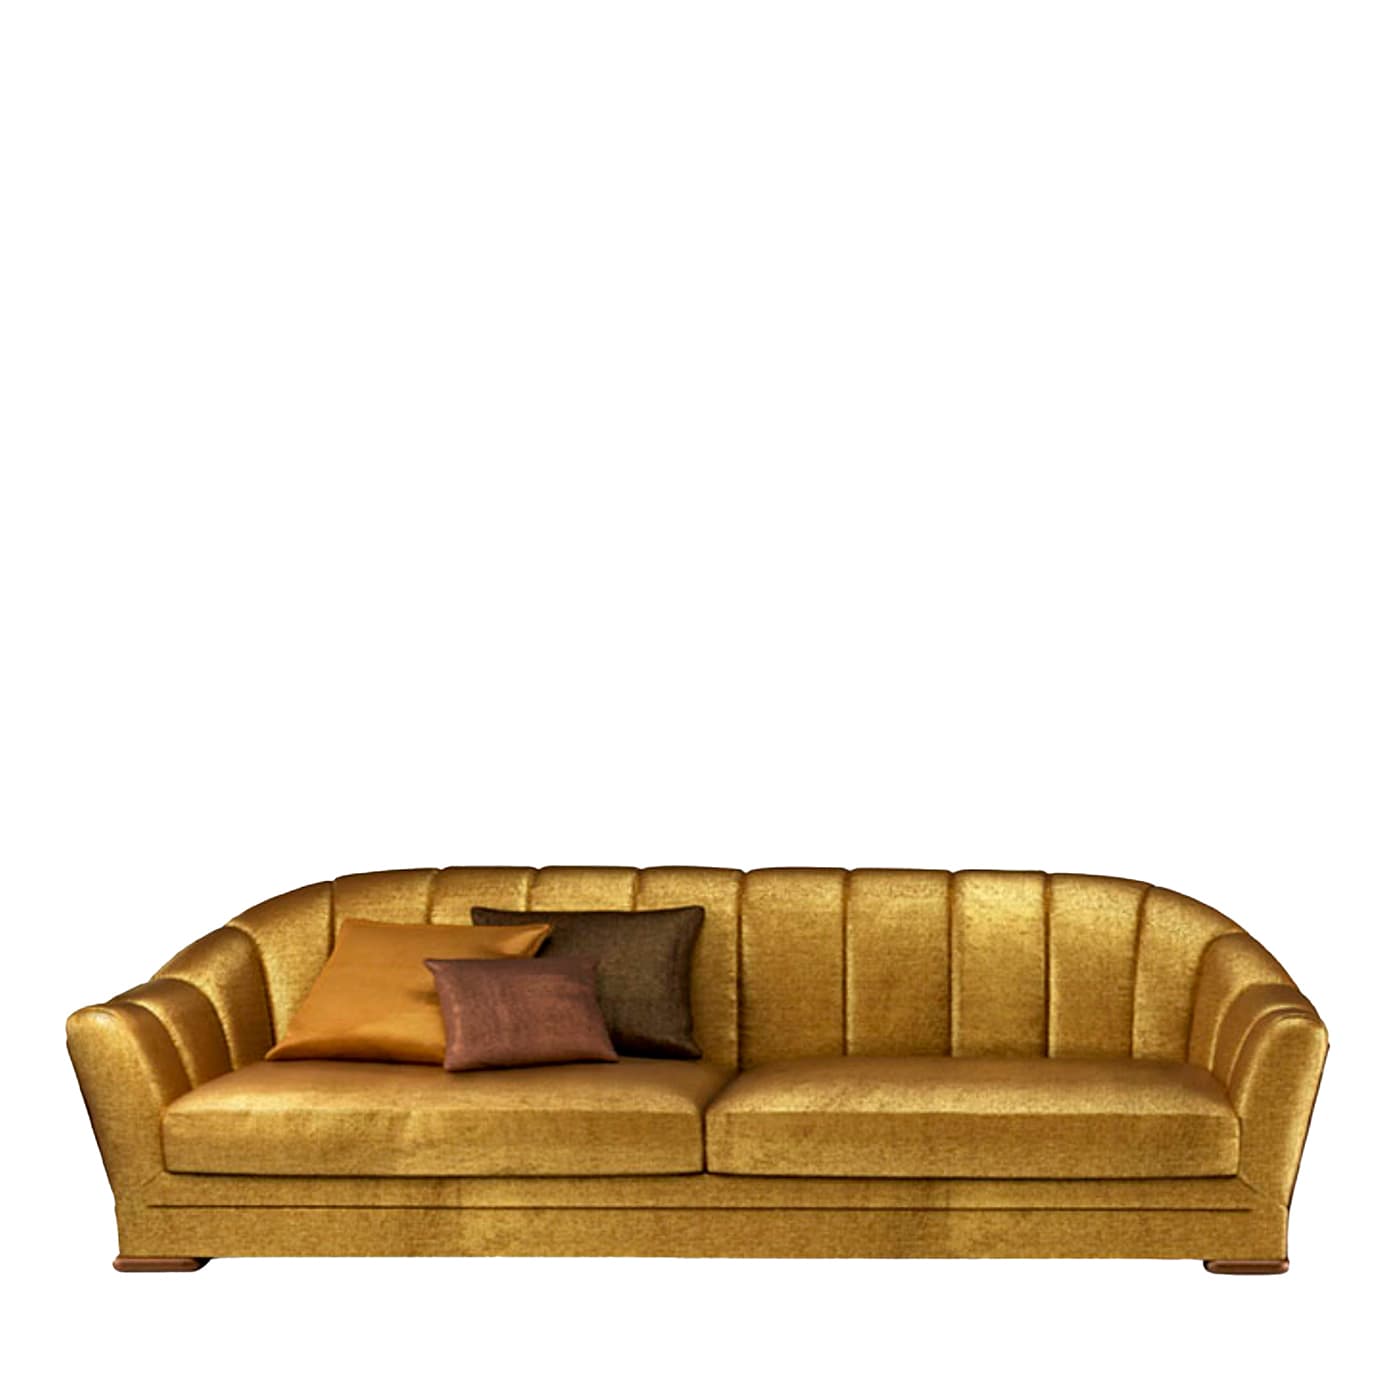 Diamond 4 seater Golden Sofa - Sicis